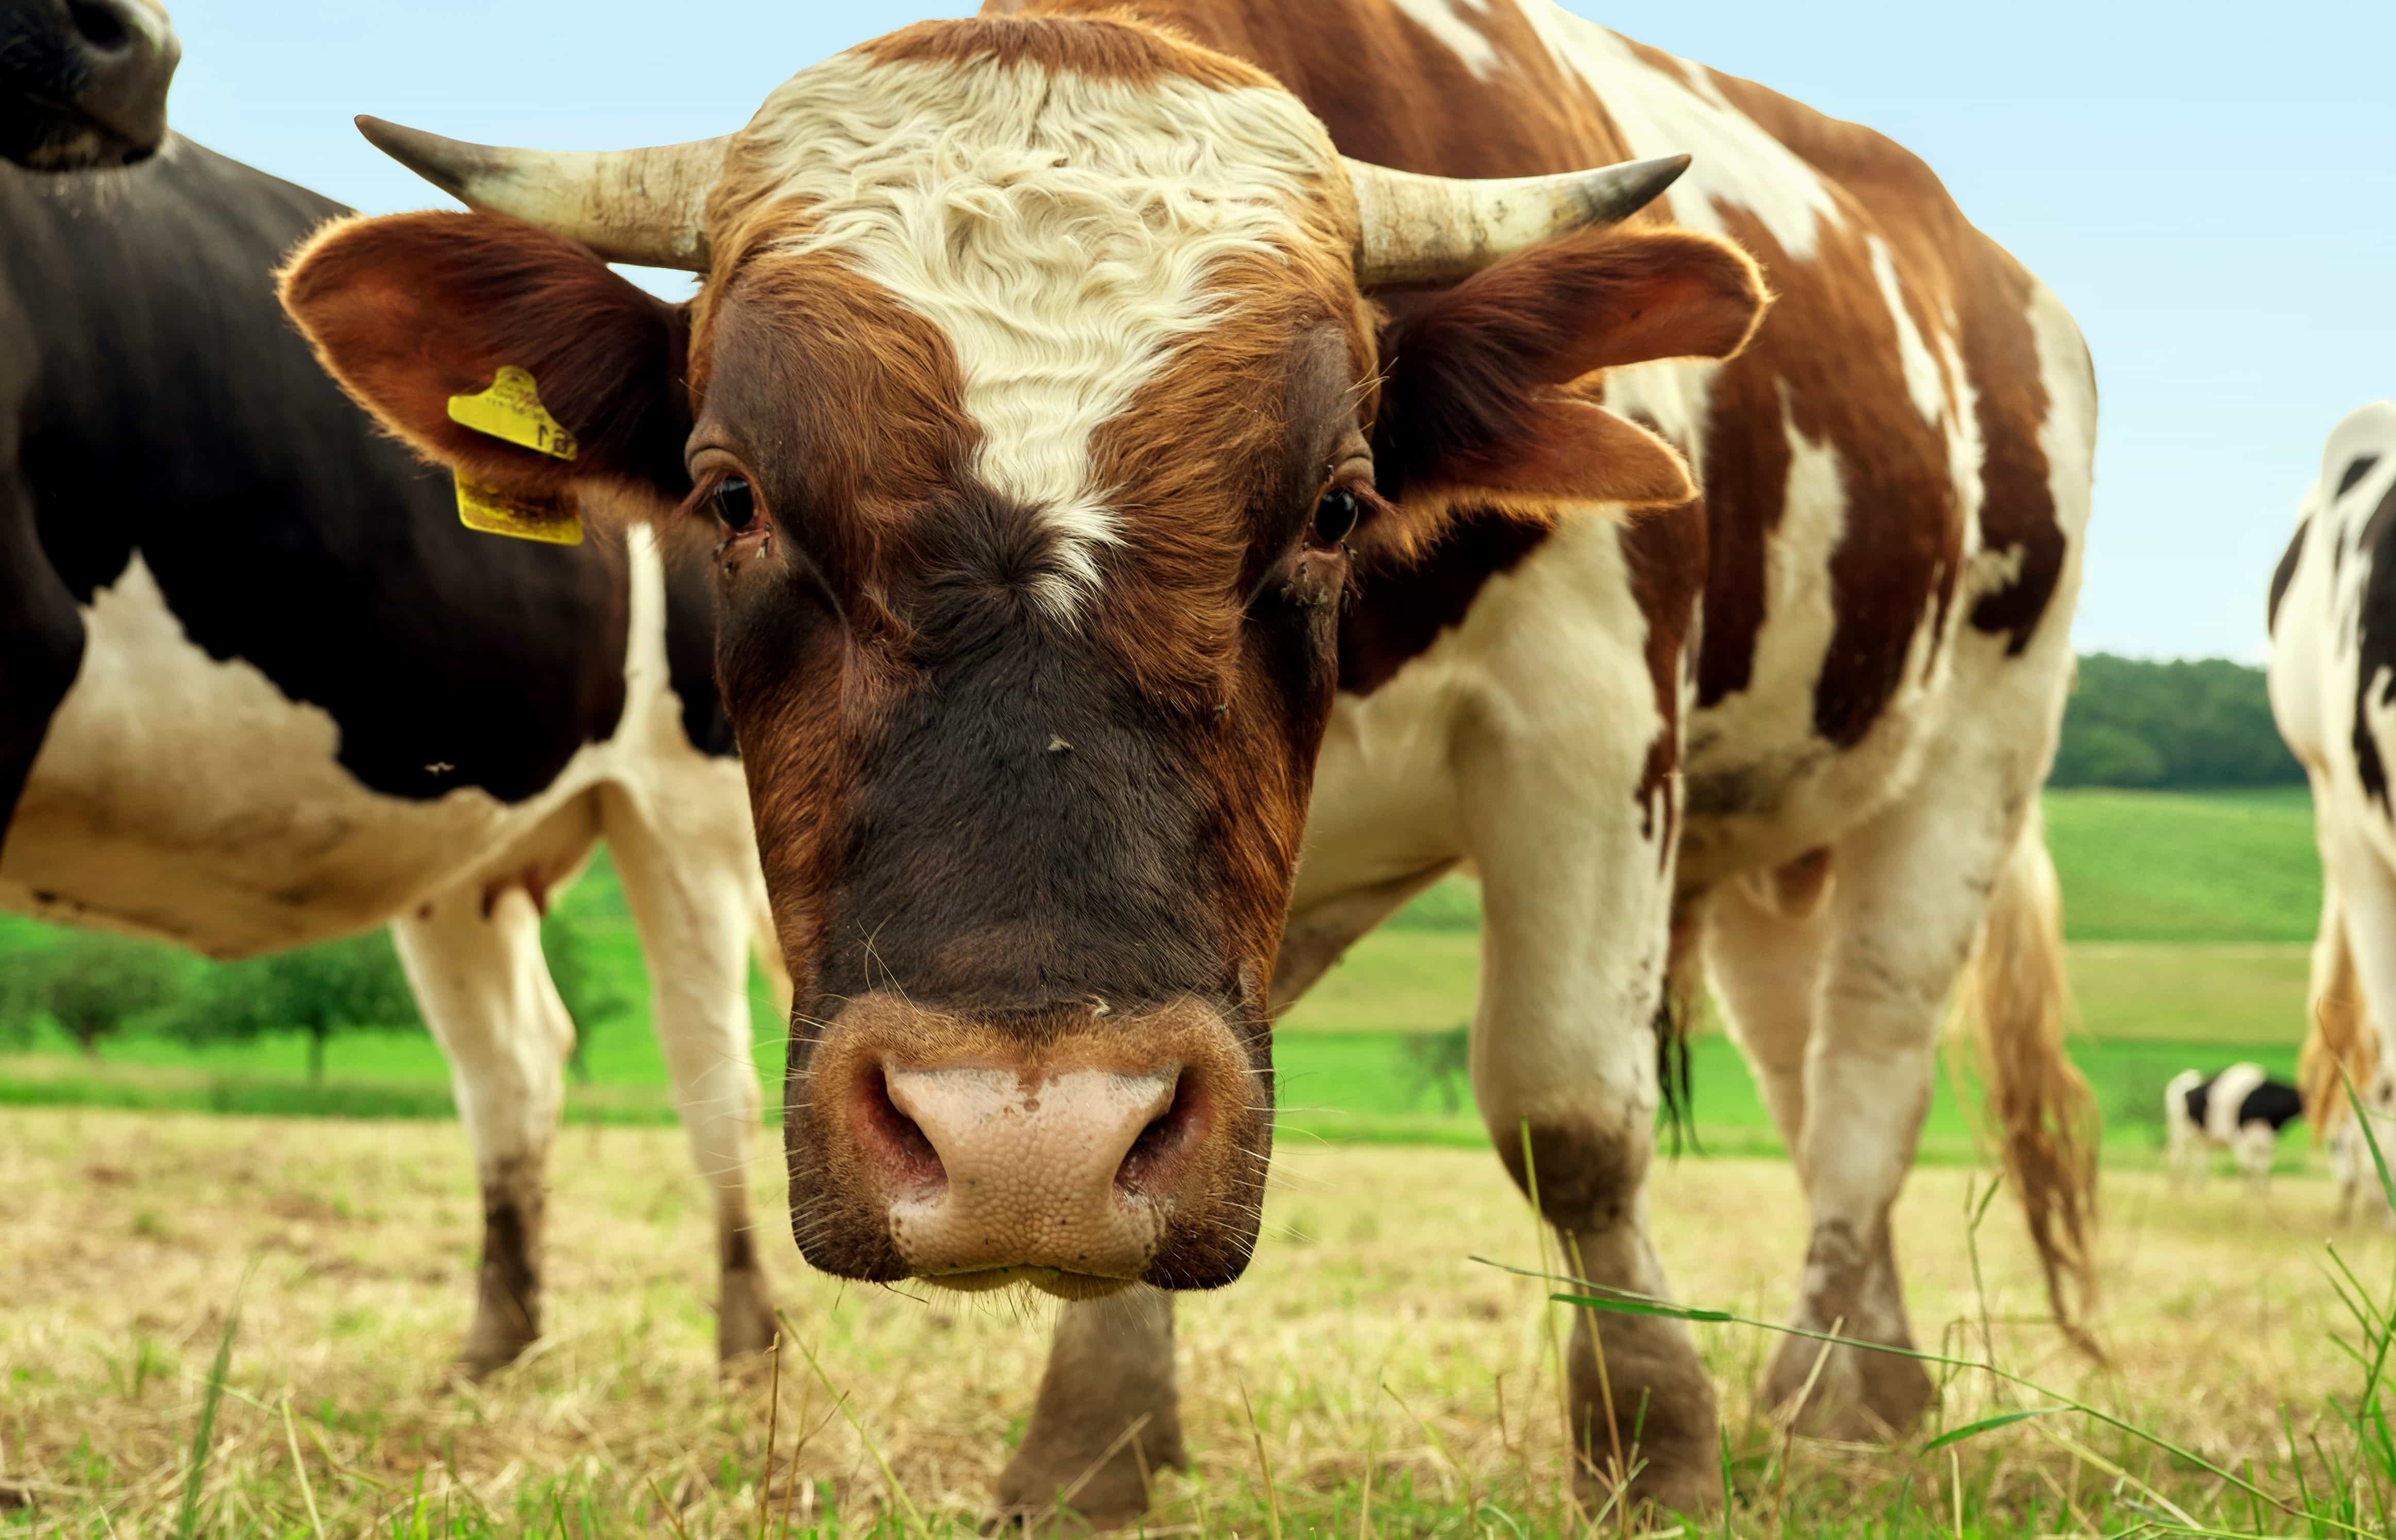 Free picture: cow, grass, livestock, farmland, cattle, farm, agriculture